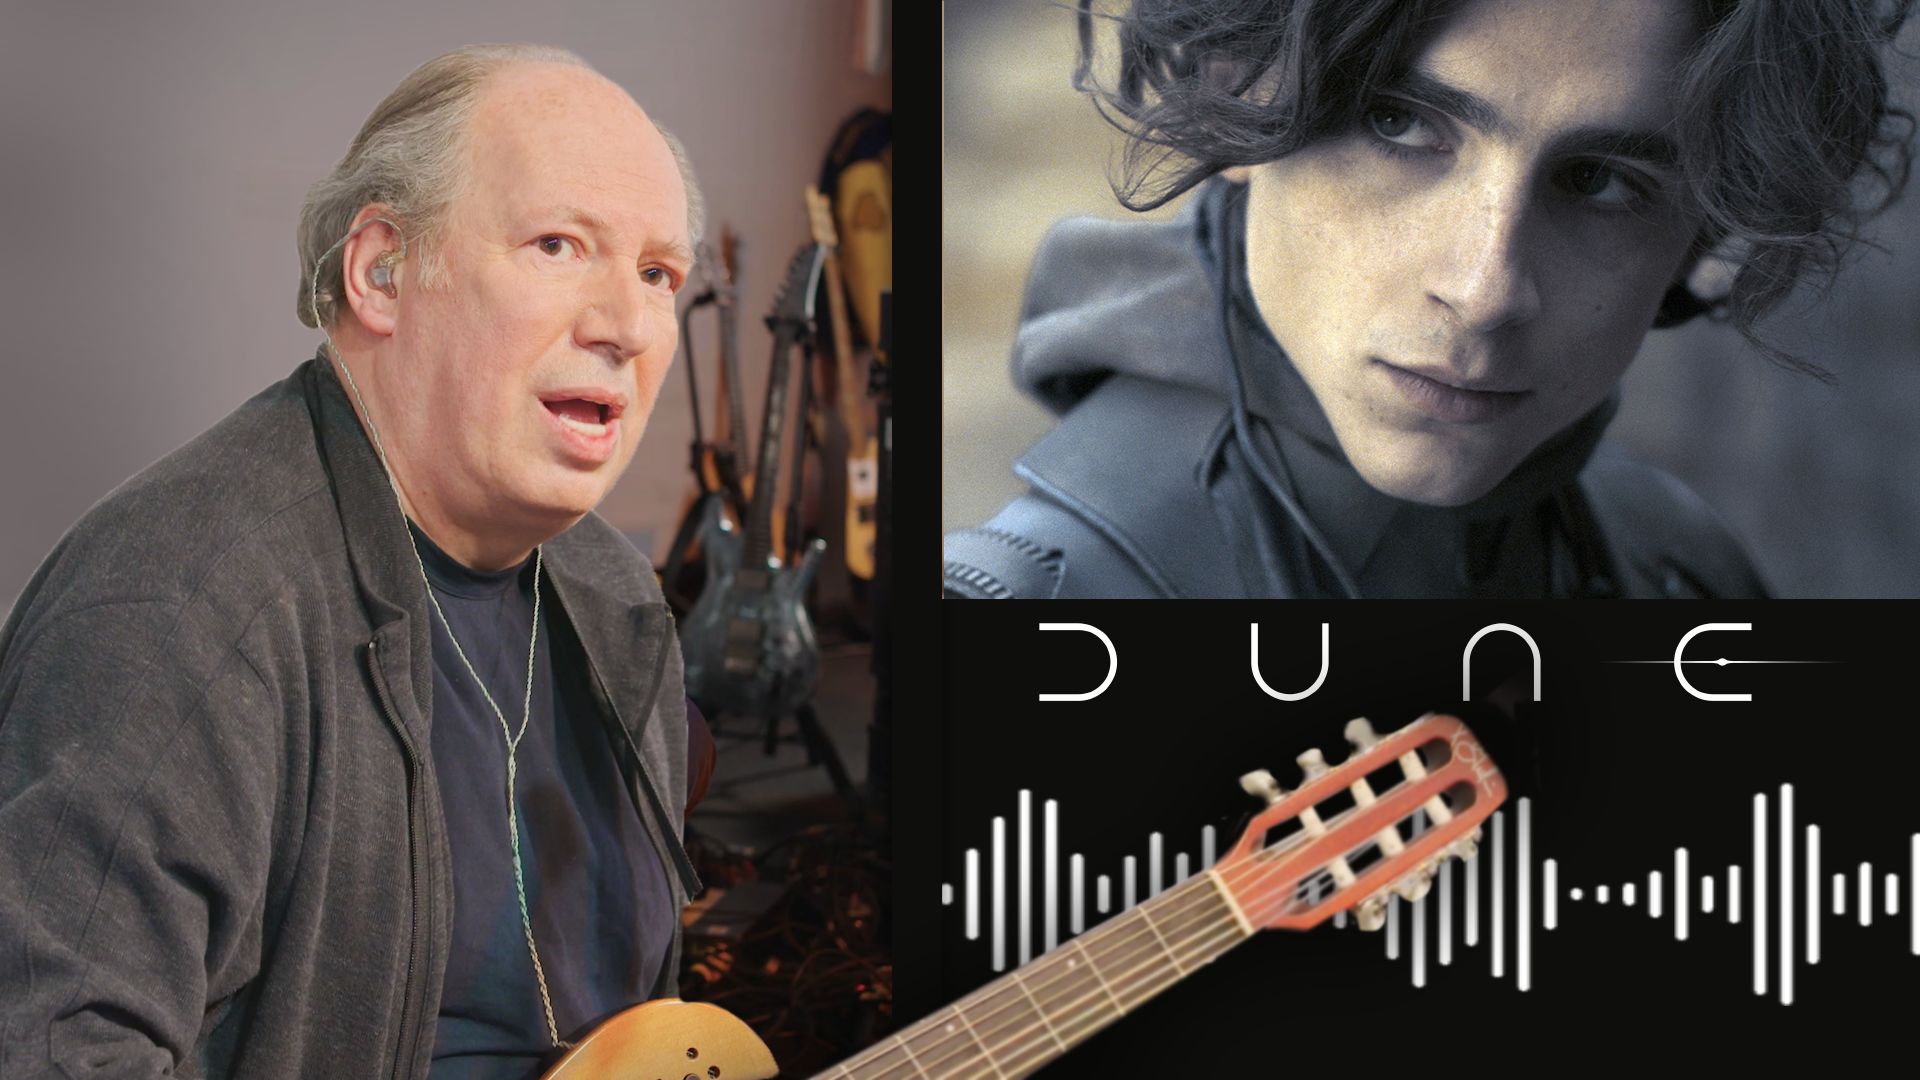 Watch How 'Dune' Composer Hans Zimmer Created the Oscar-Winning